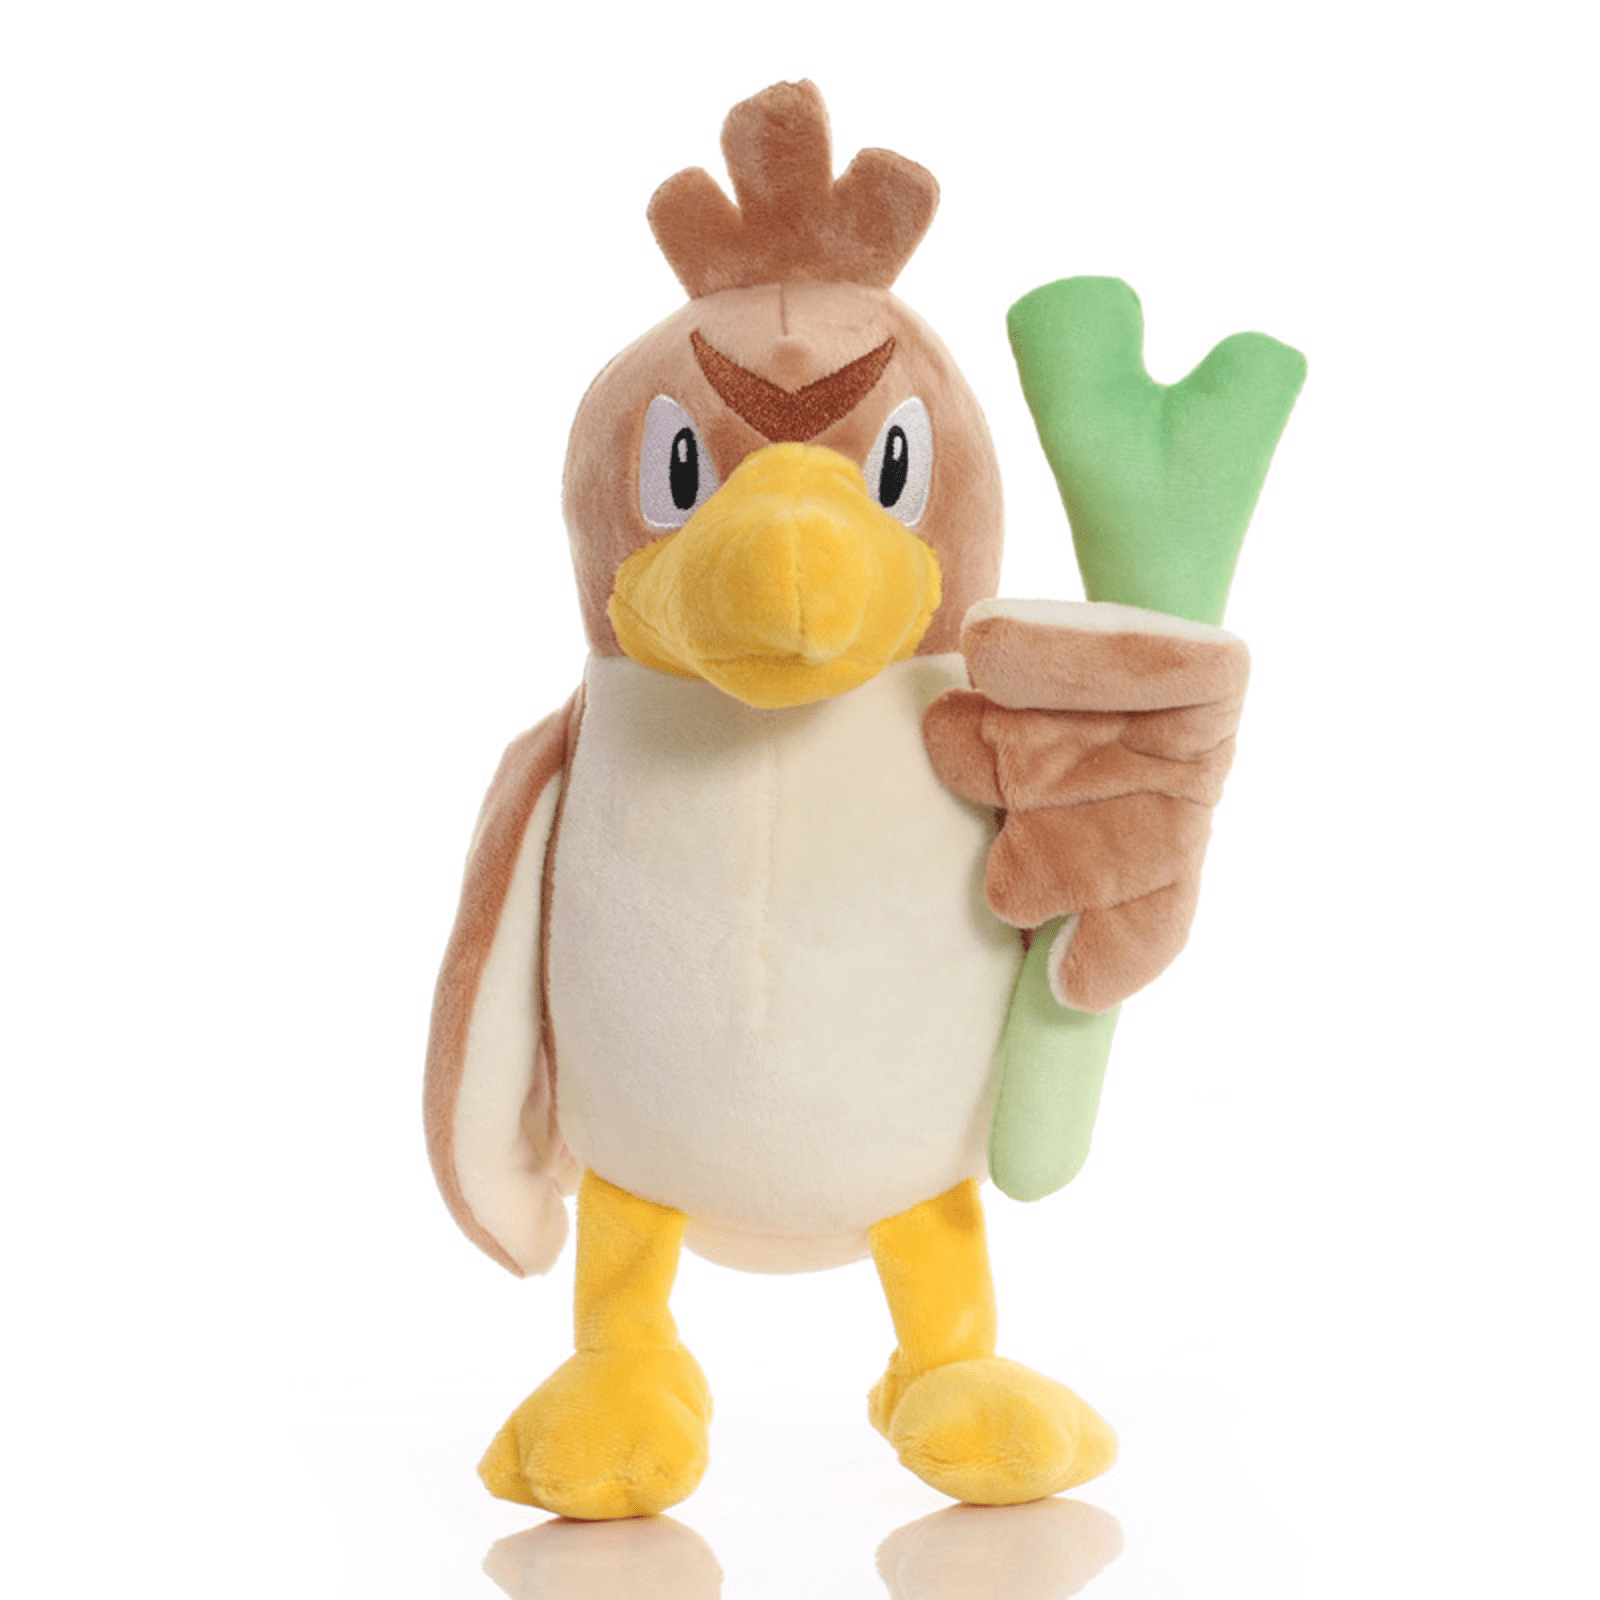 SeekFunning Pokémon Farfetch'd Plush 8" toys, Collection Dolls Birthday Gift for Children